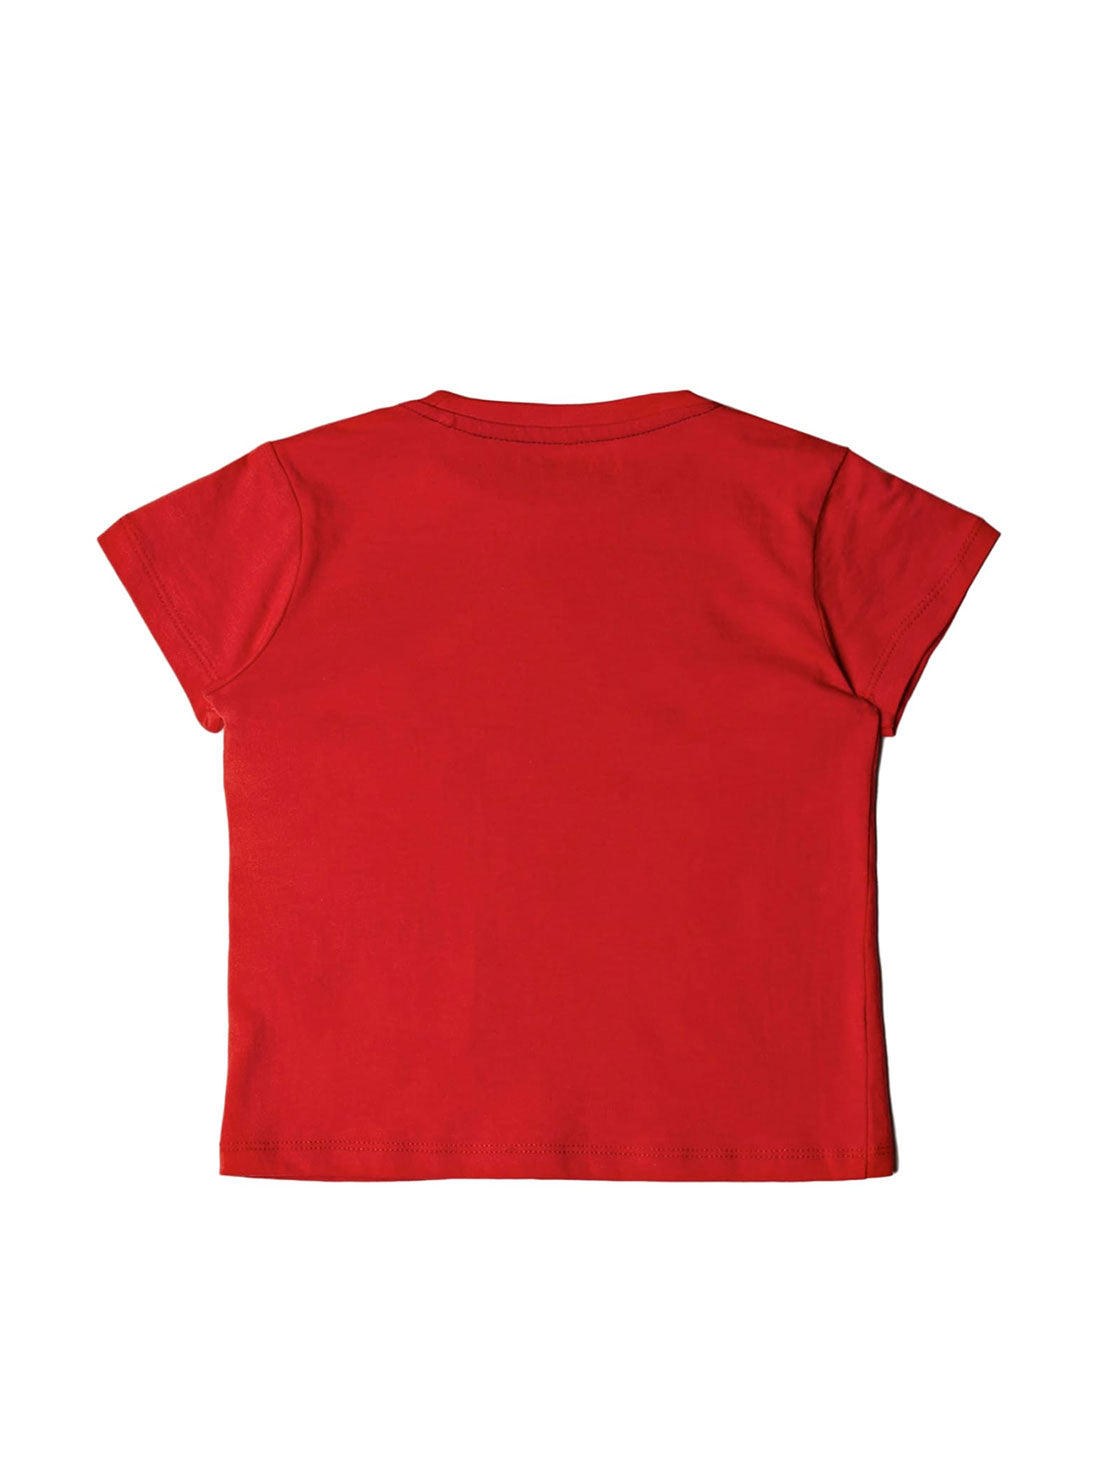 GUESS Little Boys Red Logo Short Sleeve T-Shirt (2-7)  N73I55K8HM0  Back View